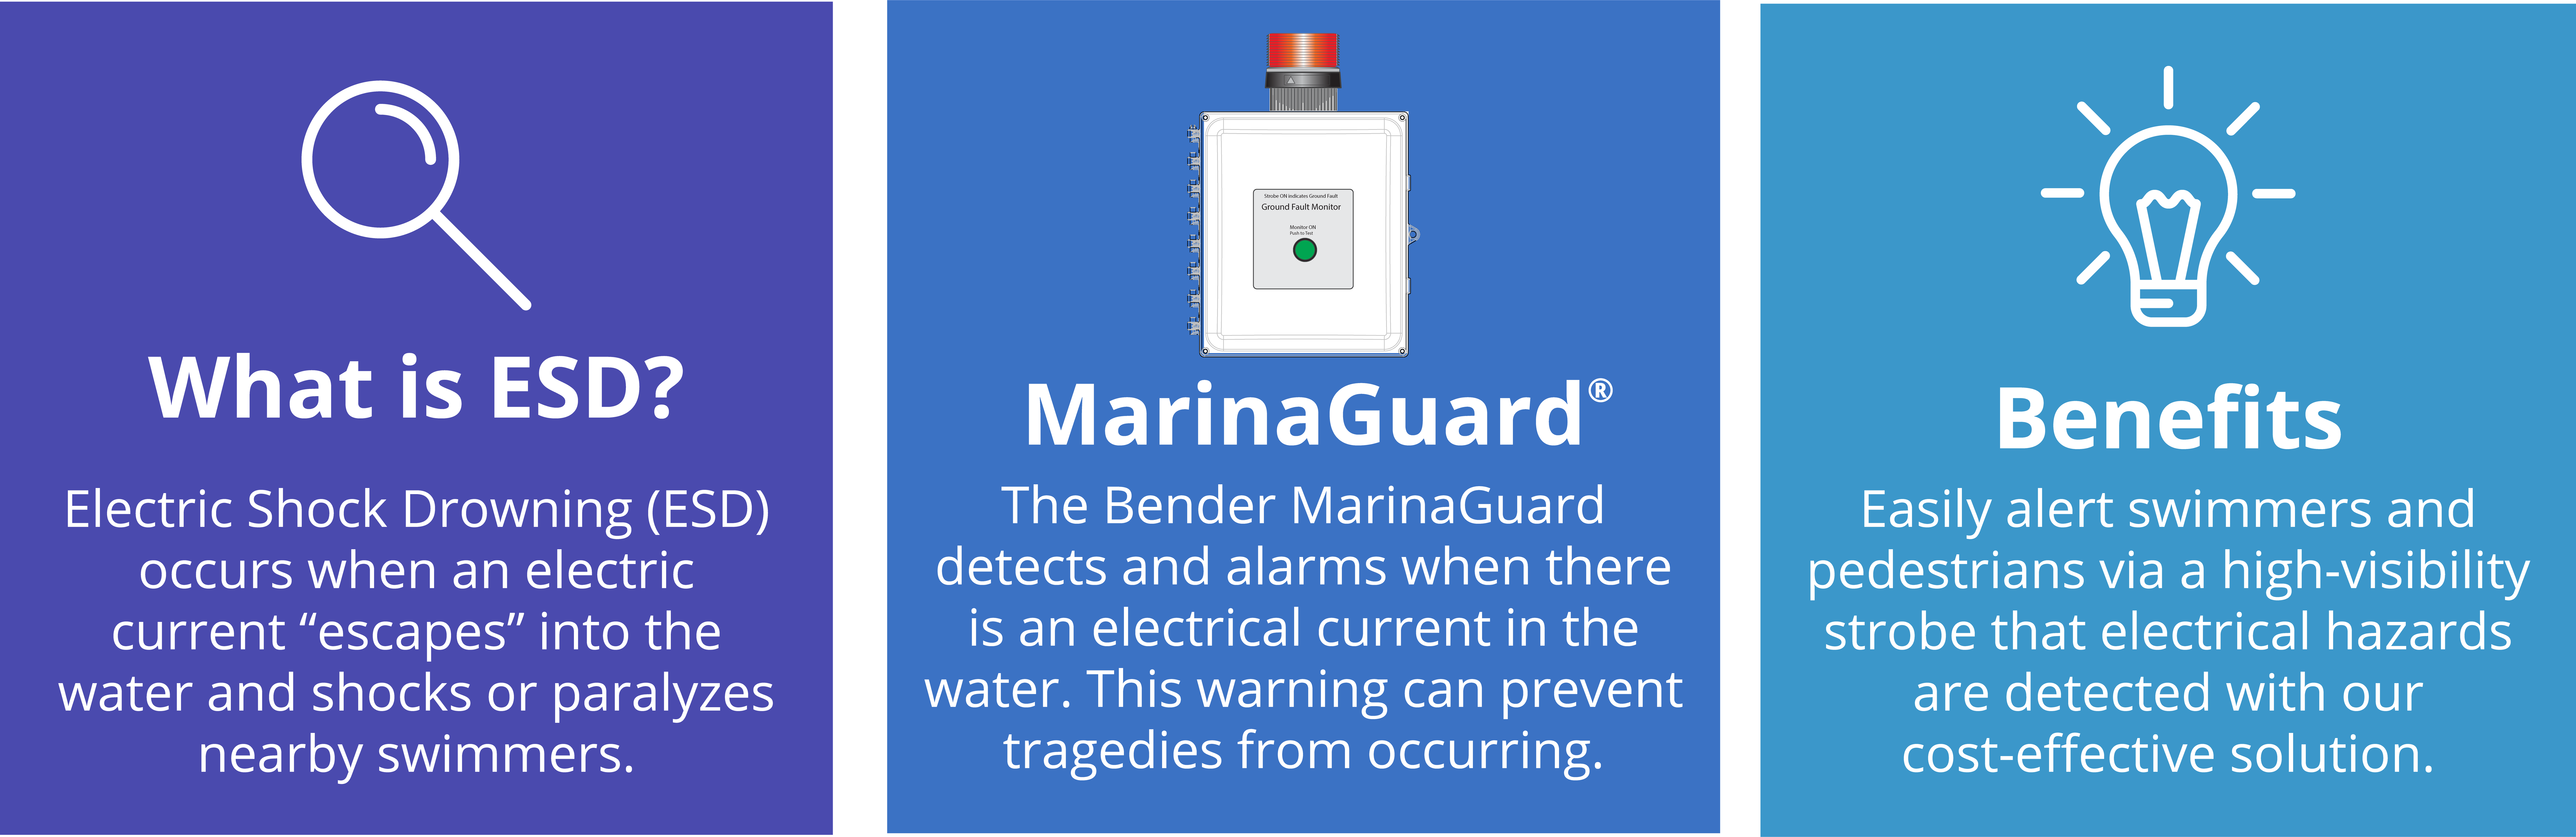 MarinaGuard infographic